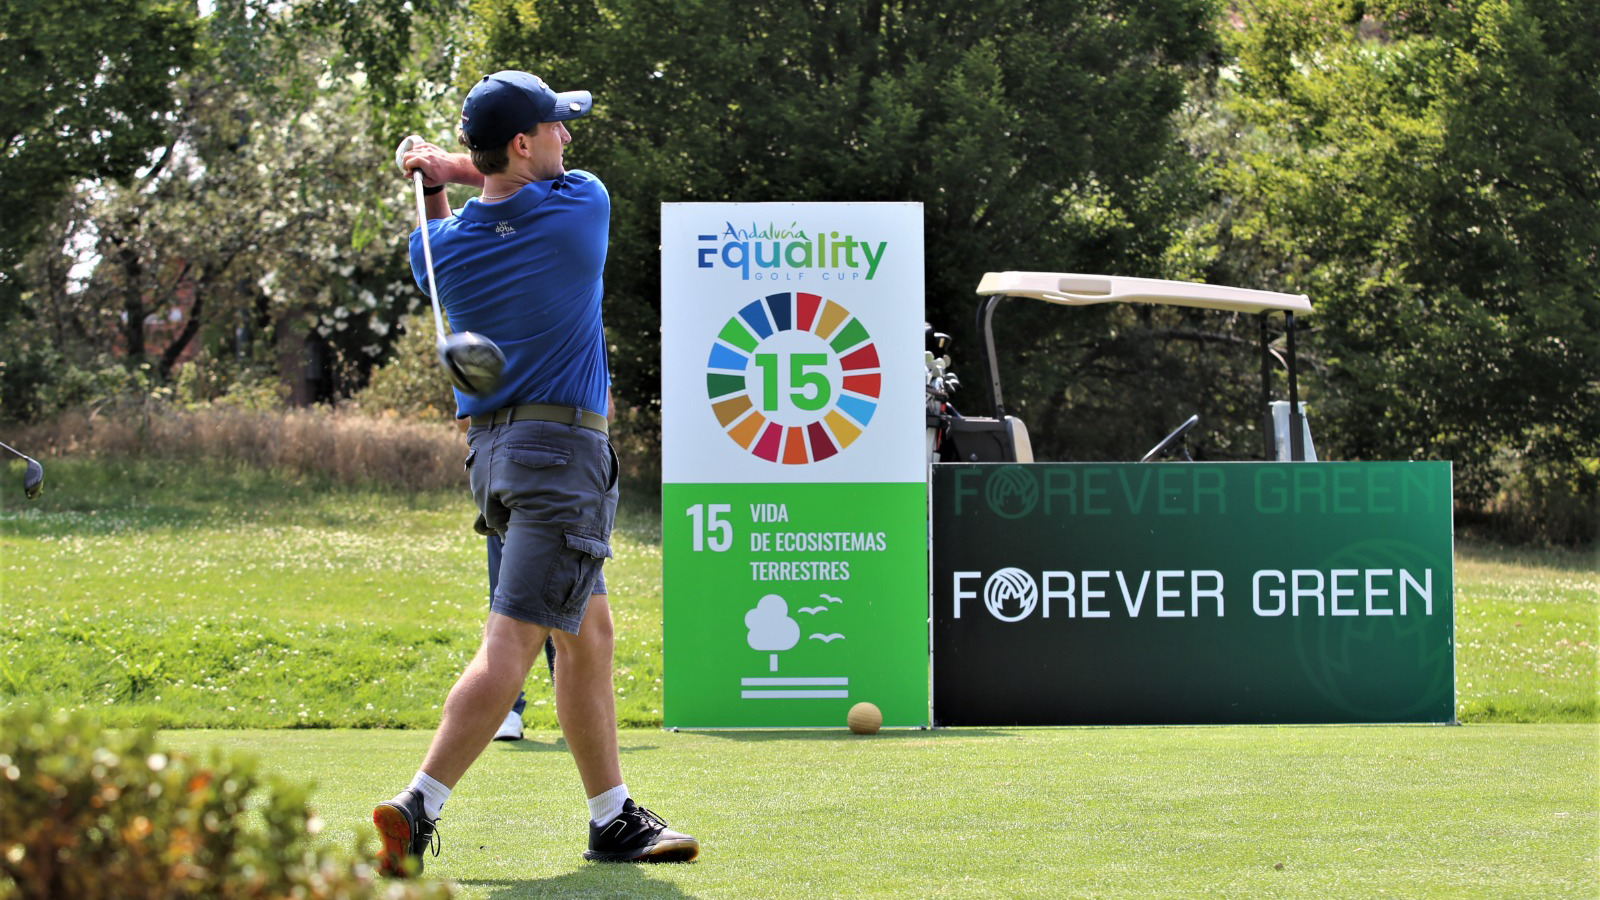 Forever Green sigue presente en Andalucía Equality Golf Cup